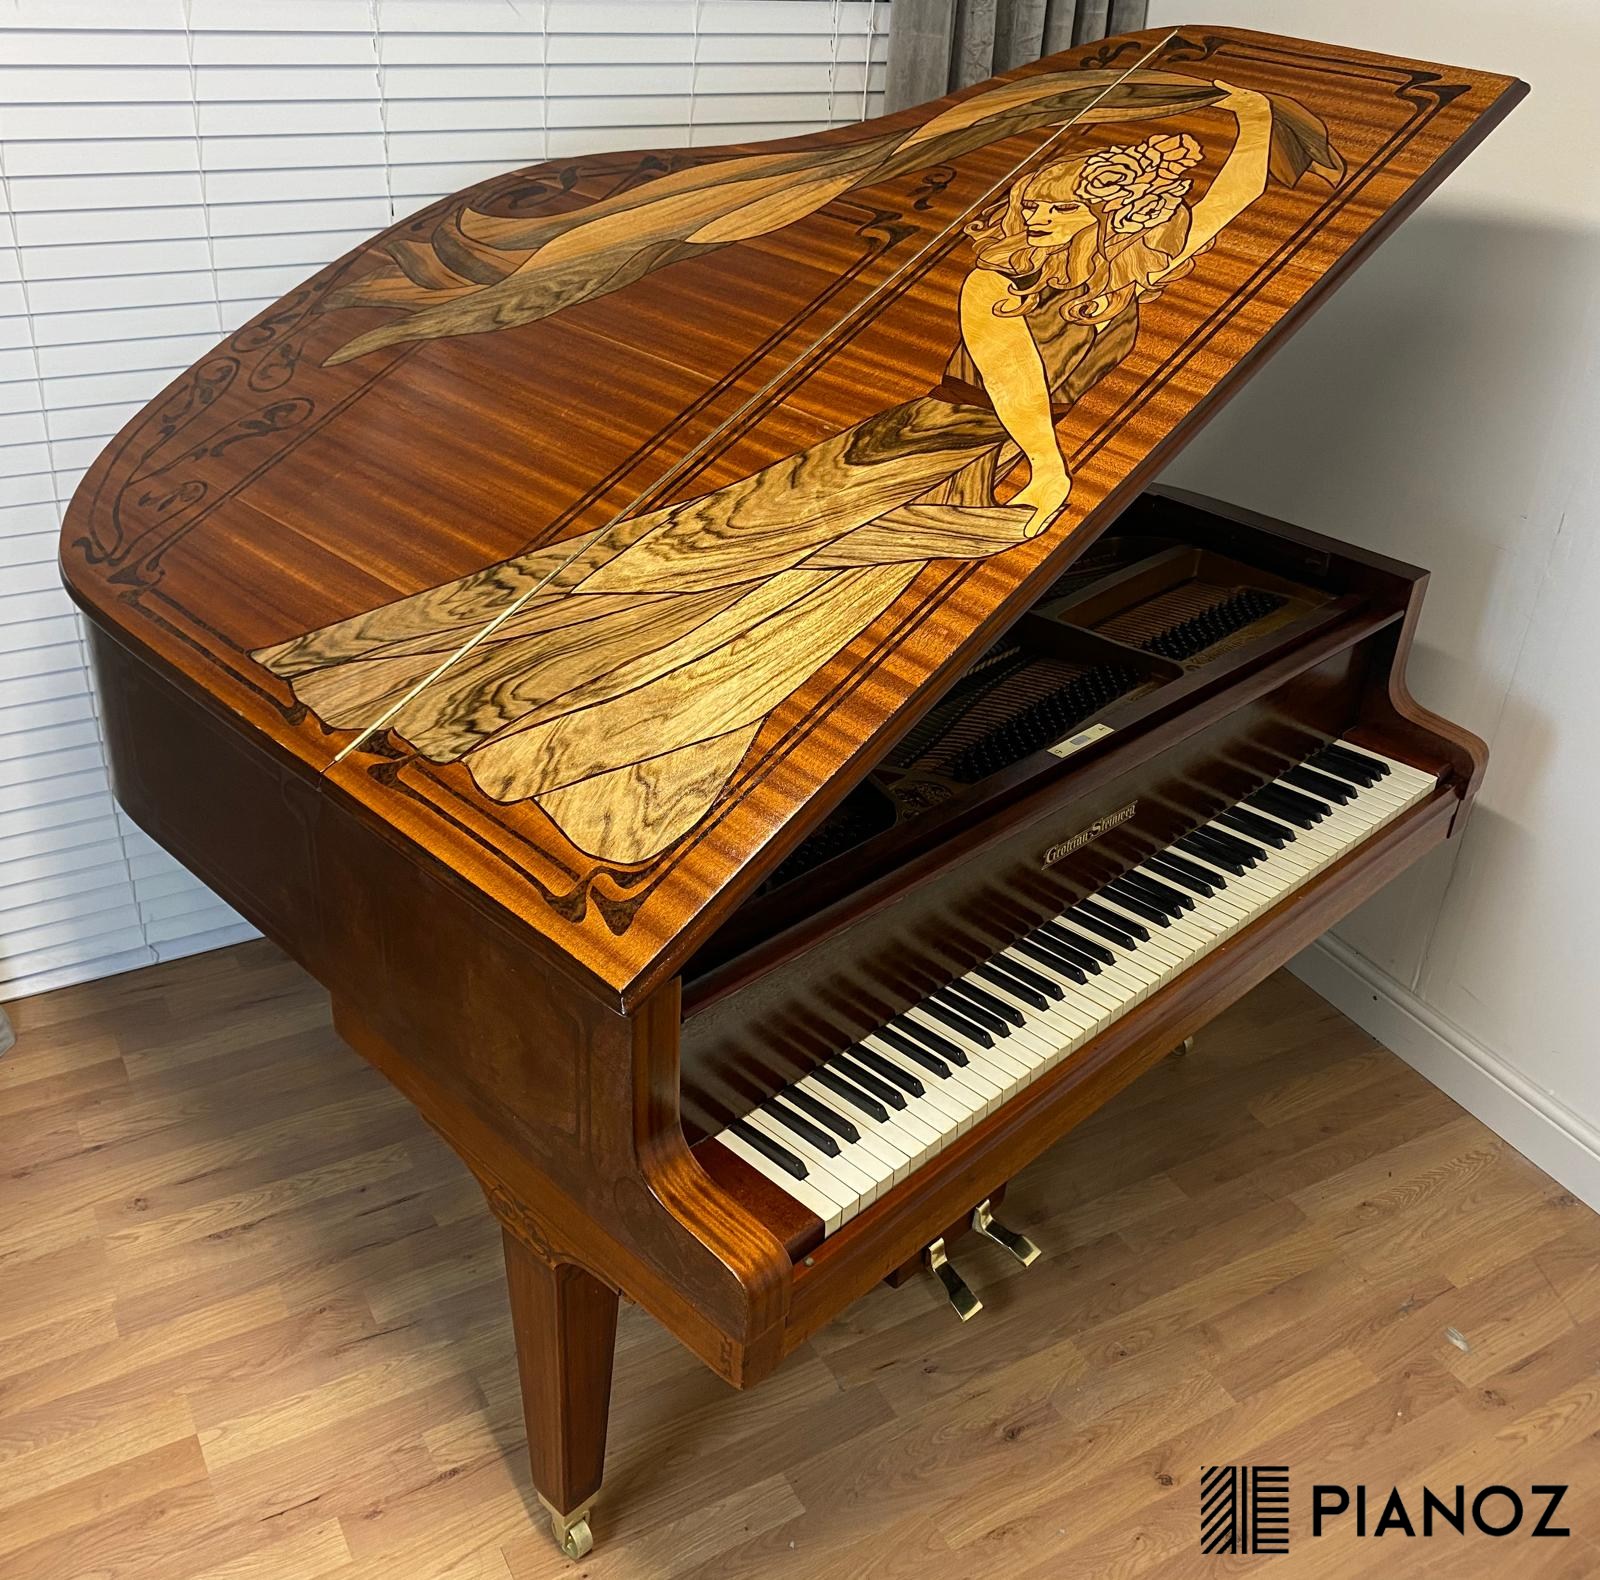 Grotrian Steinweg Art Nouveau/ Jugendstil Baby Grand Piano piano for sale in UK